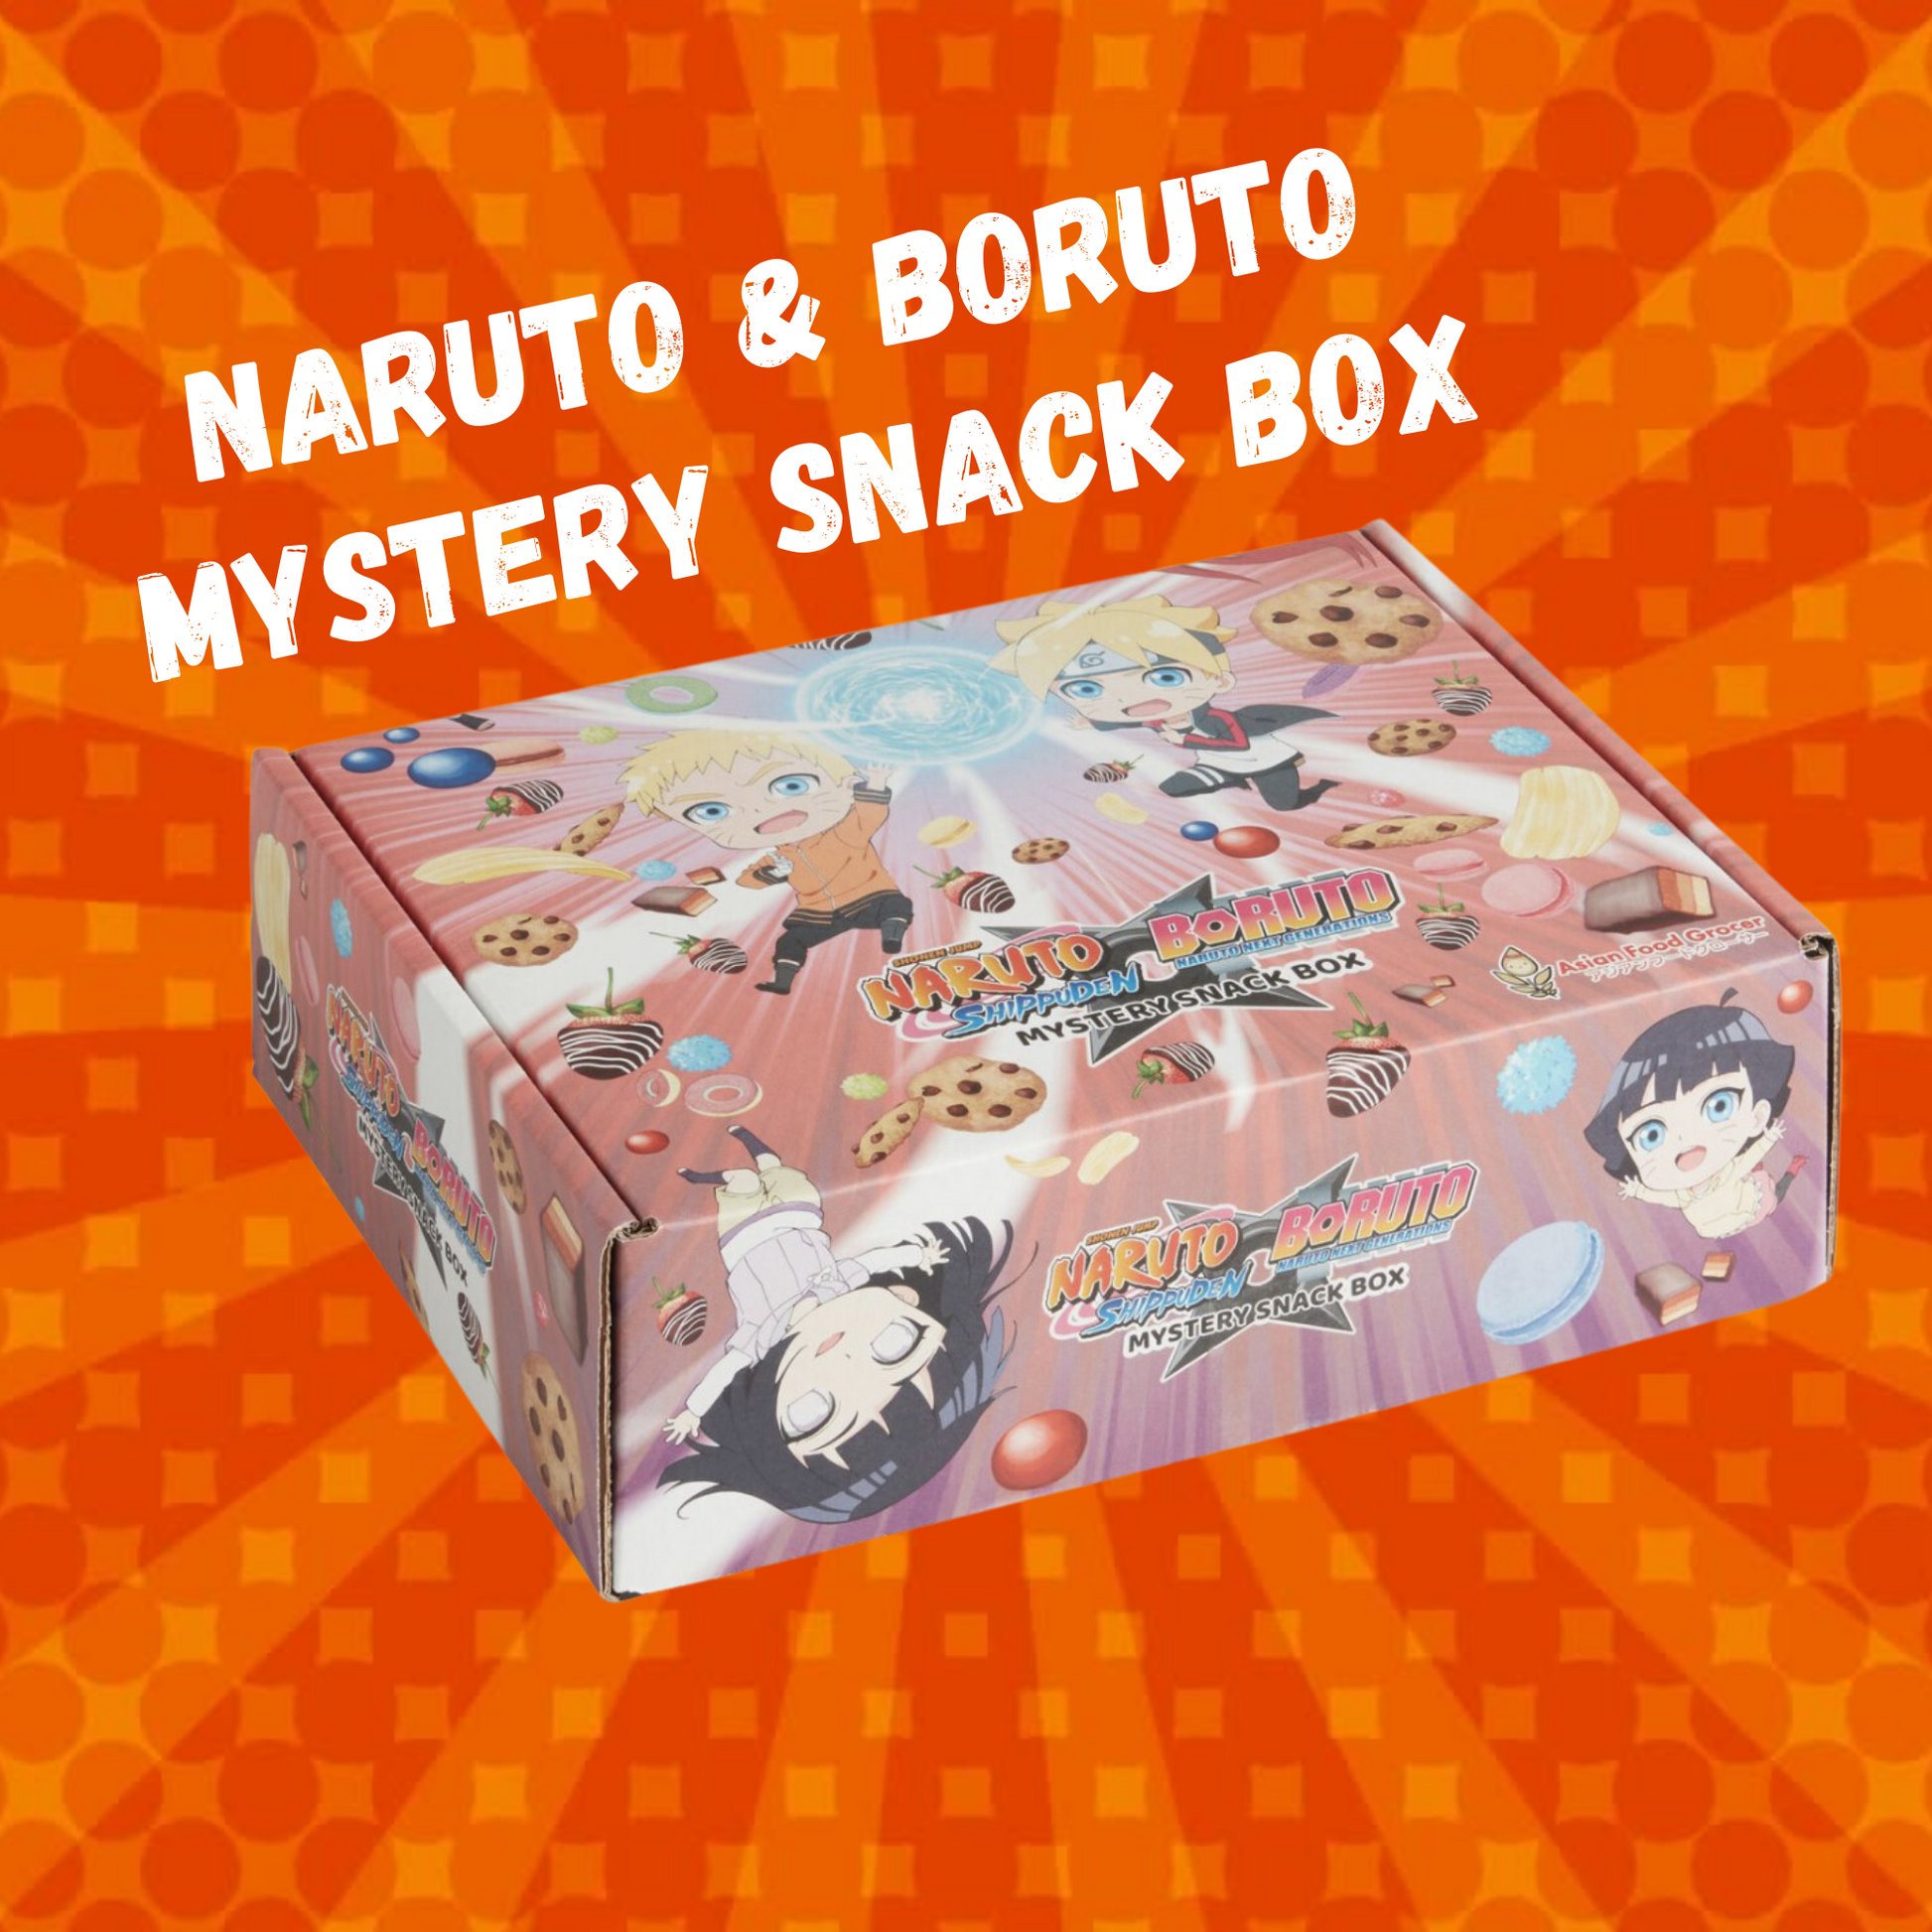 Naruto & Boruto Mystery Snack Box - Closed Box